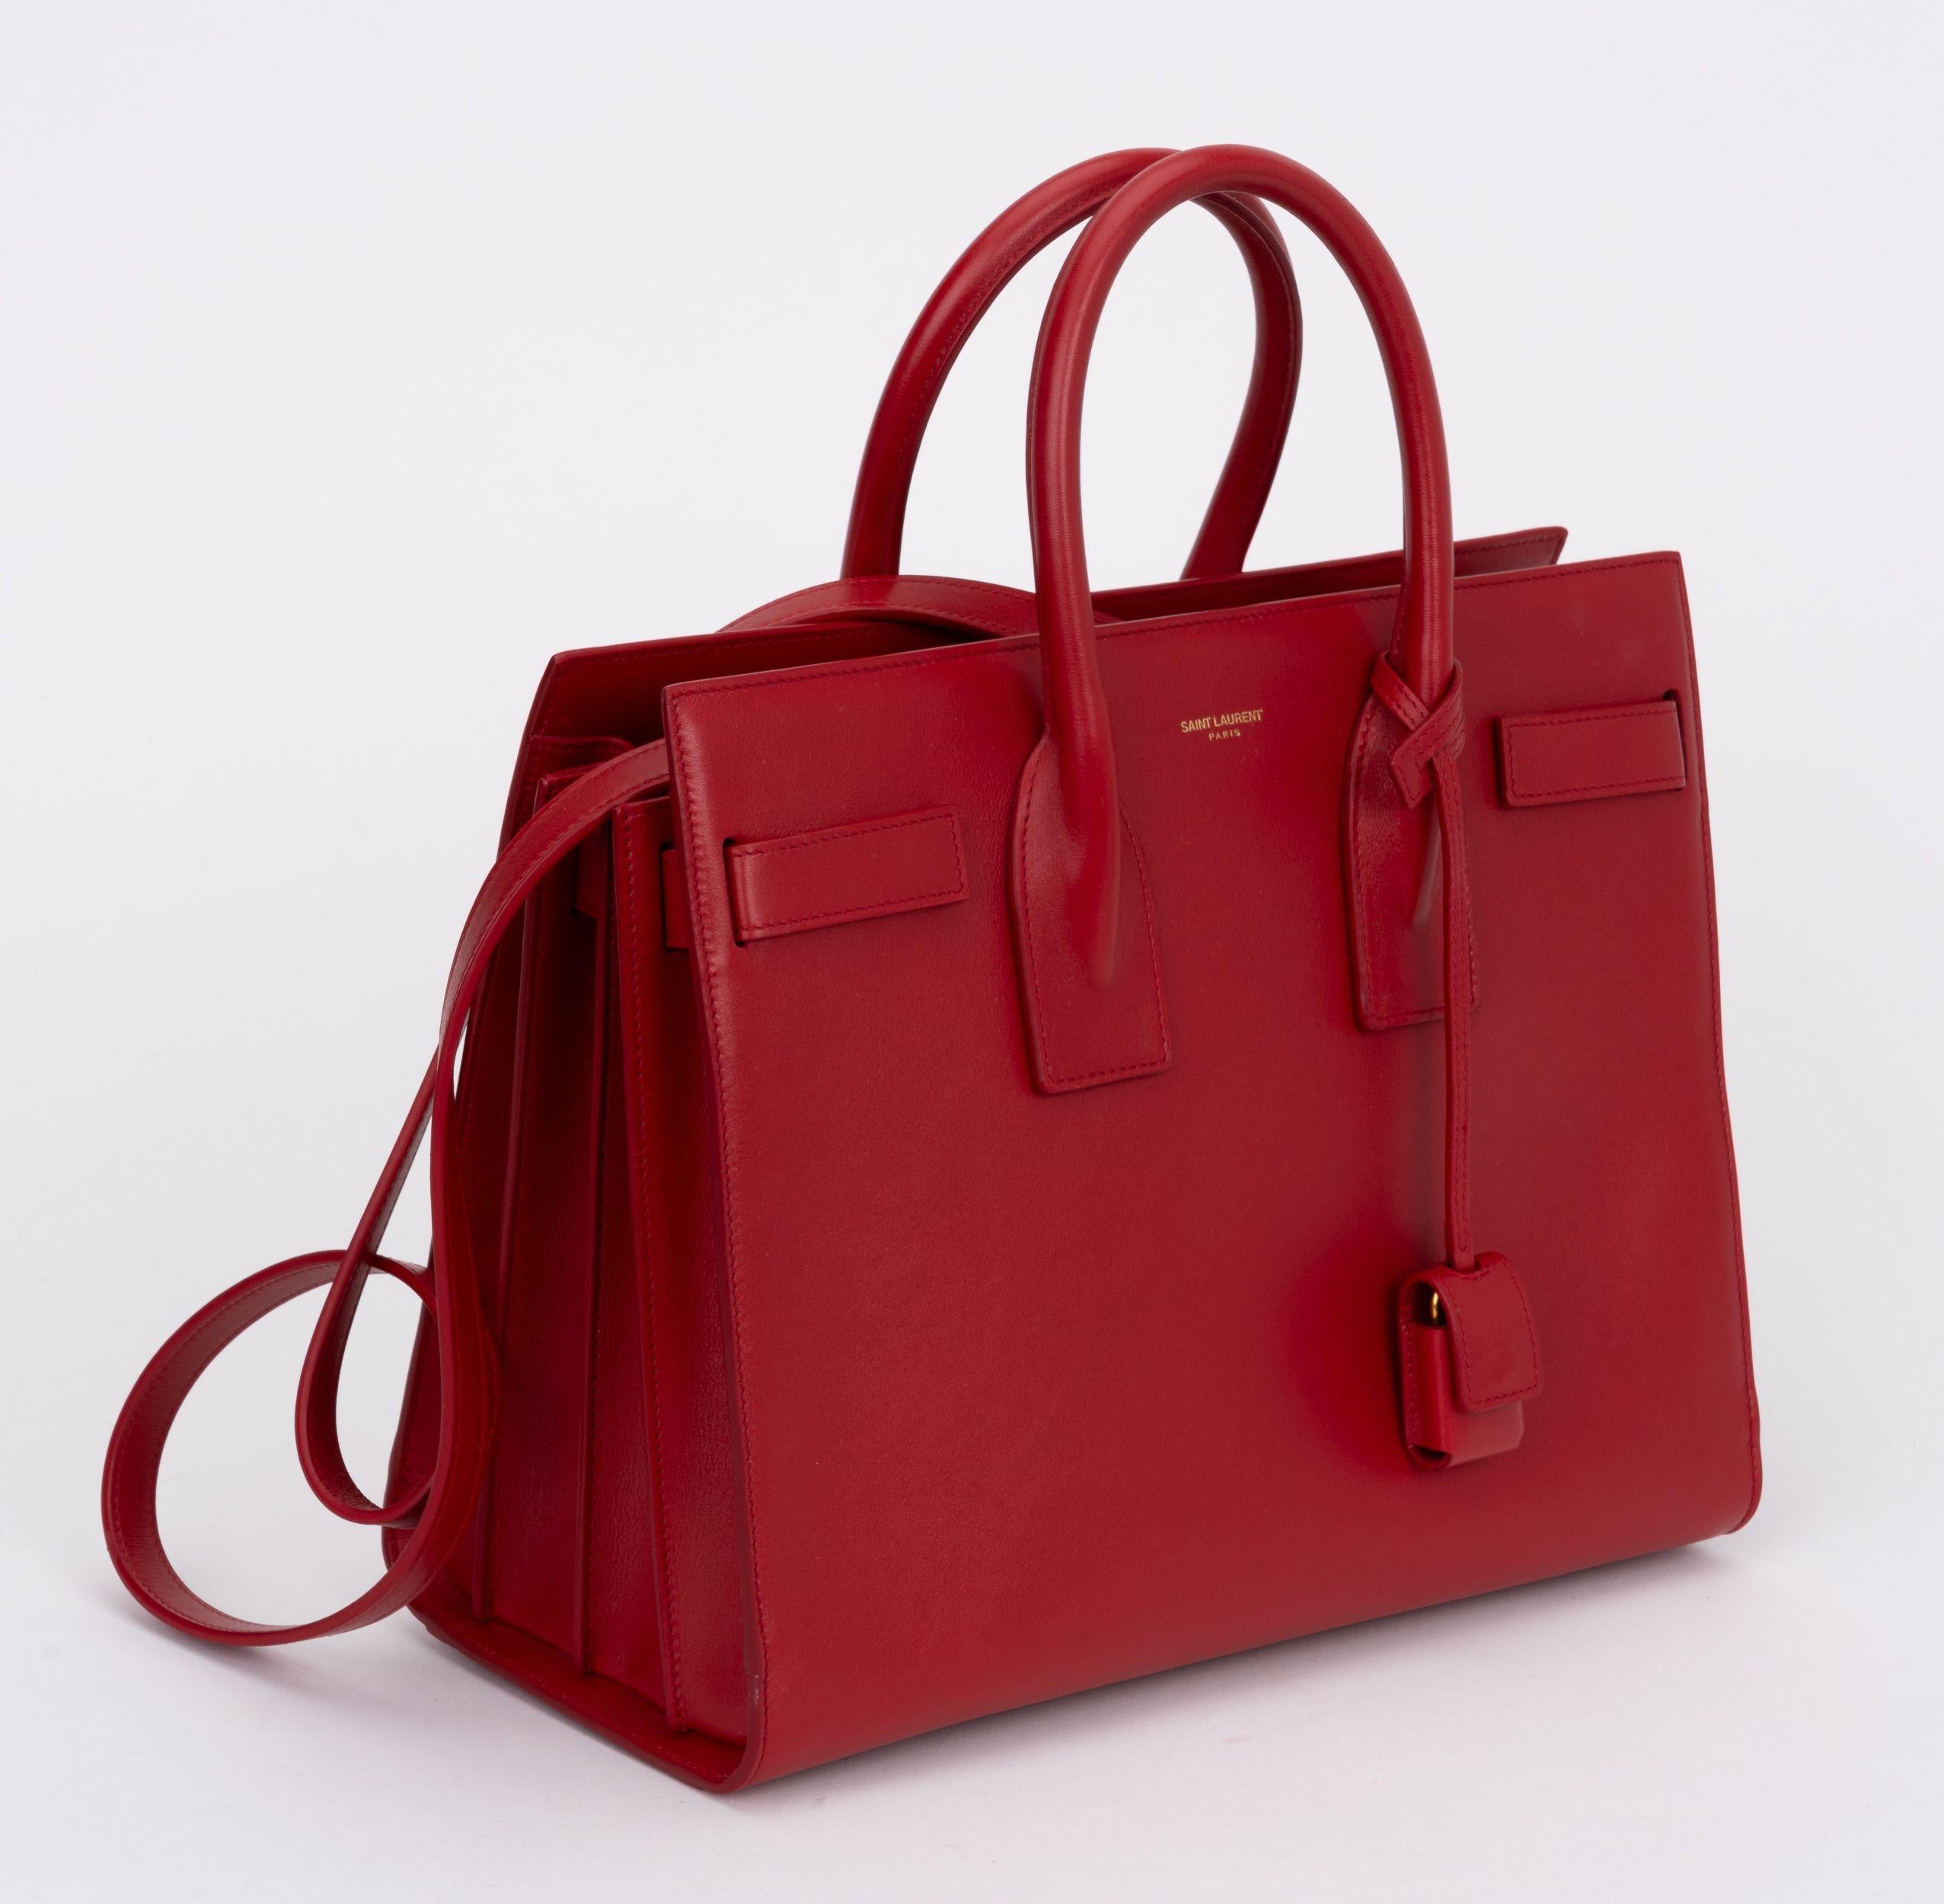 YSL new red box leather sac de jour two way tote. Clochette, tirette, lock, 2 keys. 
Store retail $3300. Handle drop 4.5